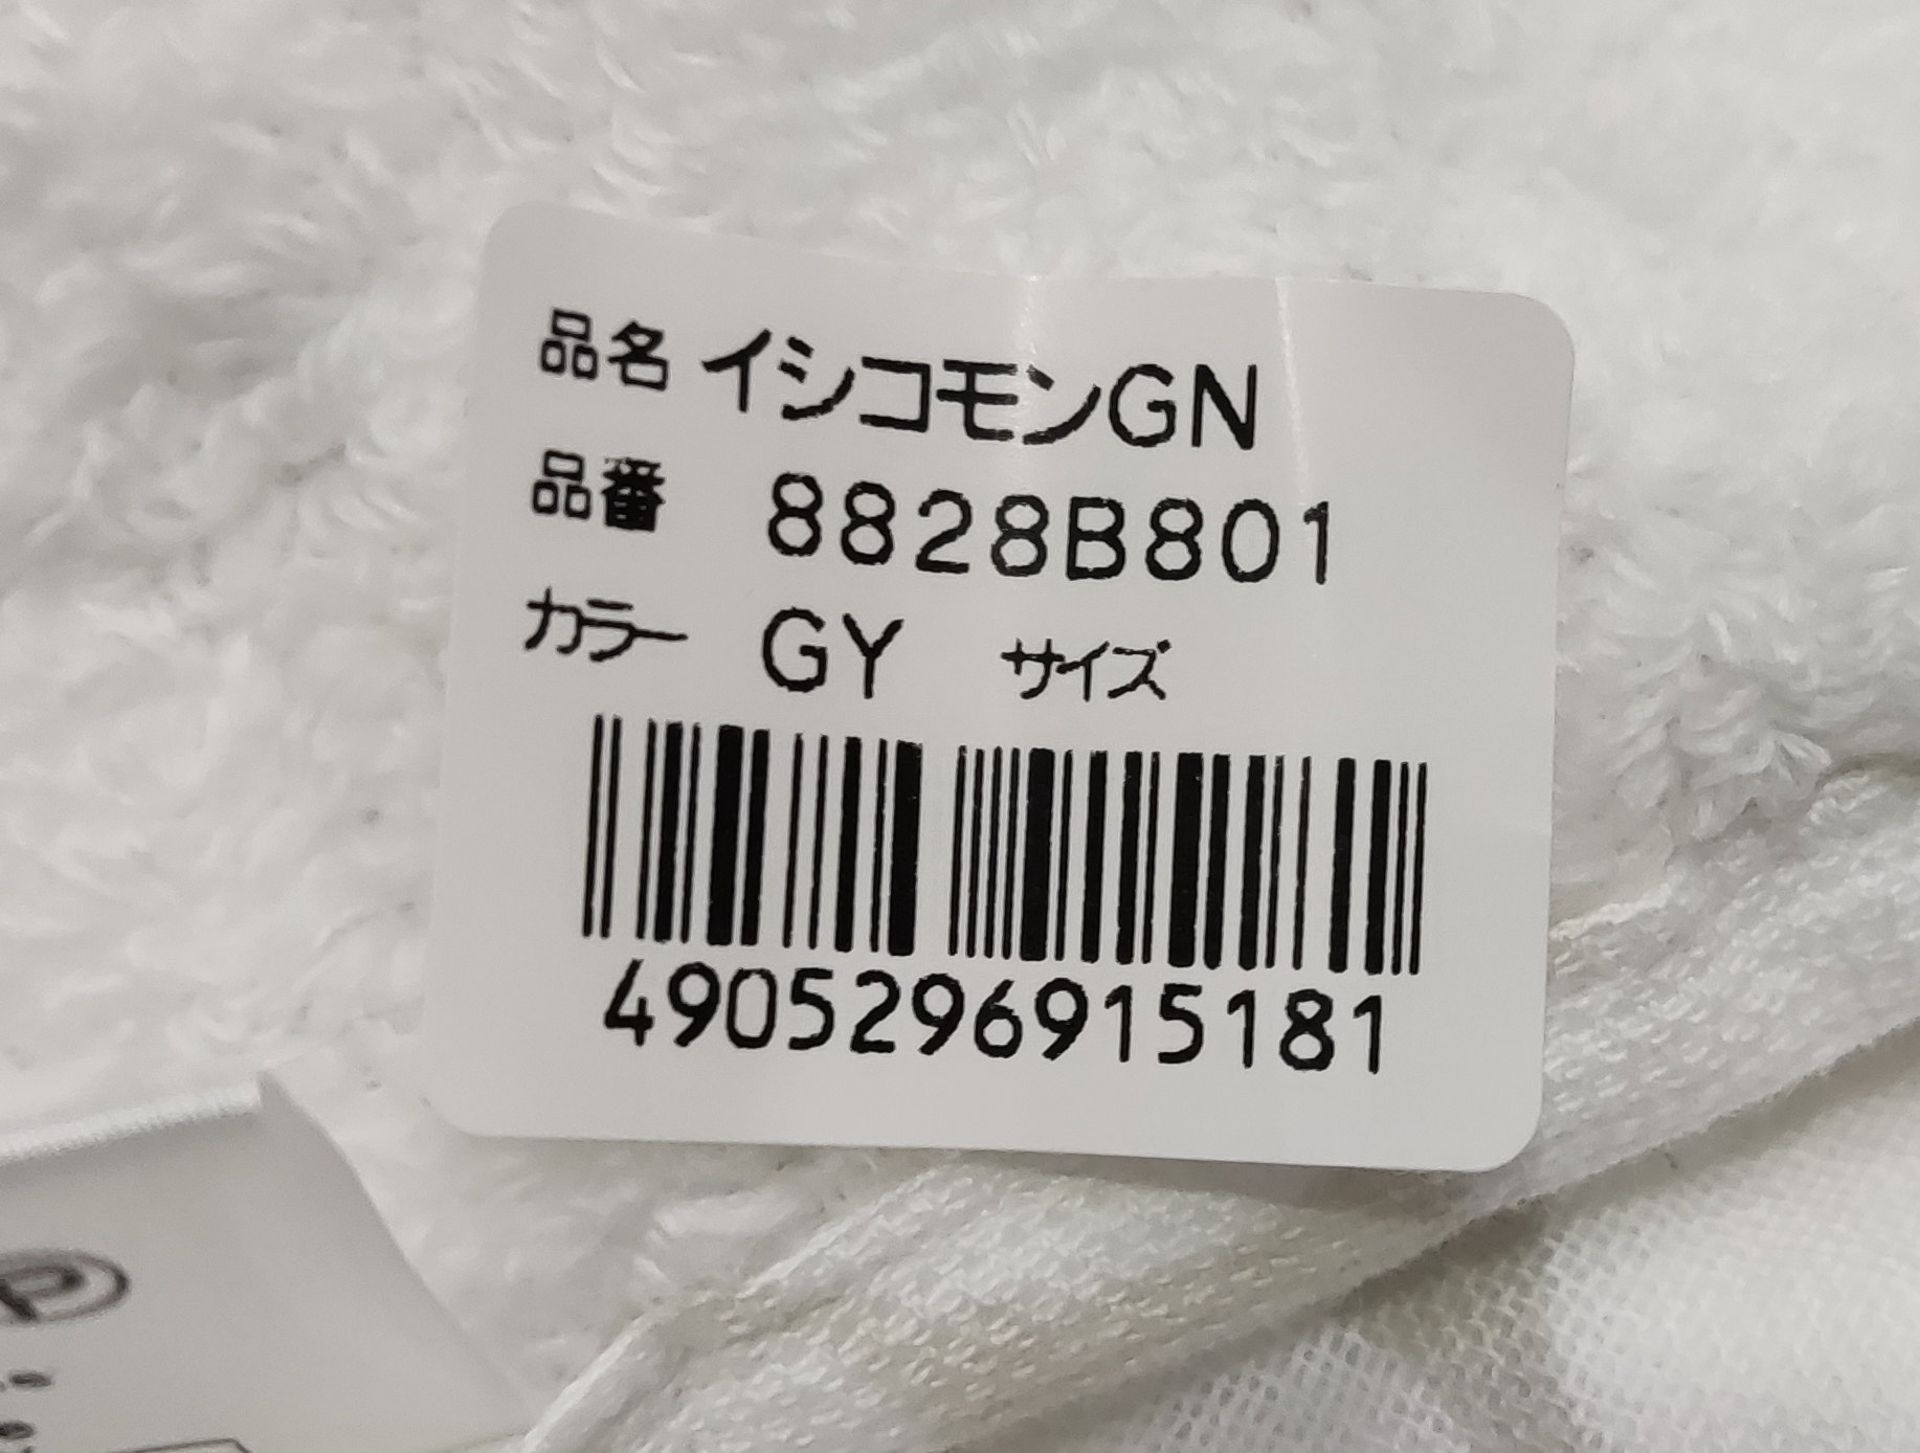 1 x UCHINO Japanese Fine Pattern Hand Towel 50X100cm - Grey - Original RRP £69.96 - Ref: 7395403/ - Image 5 of 10